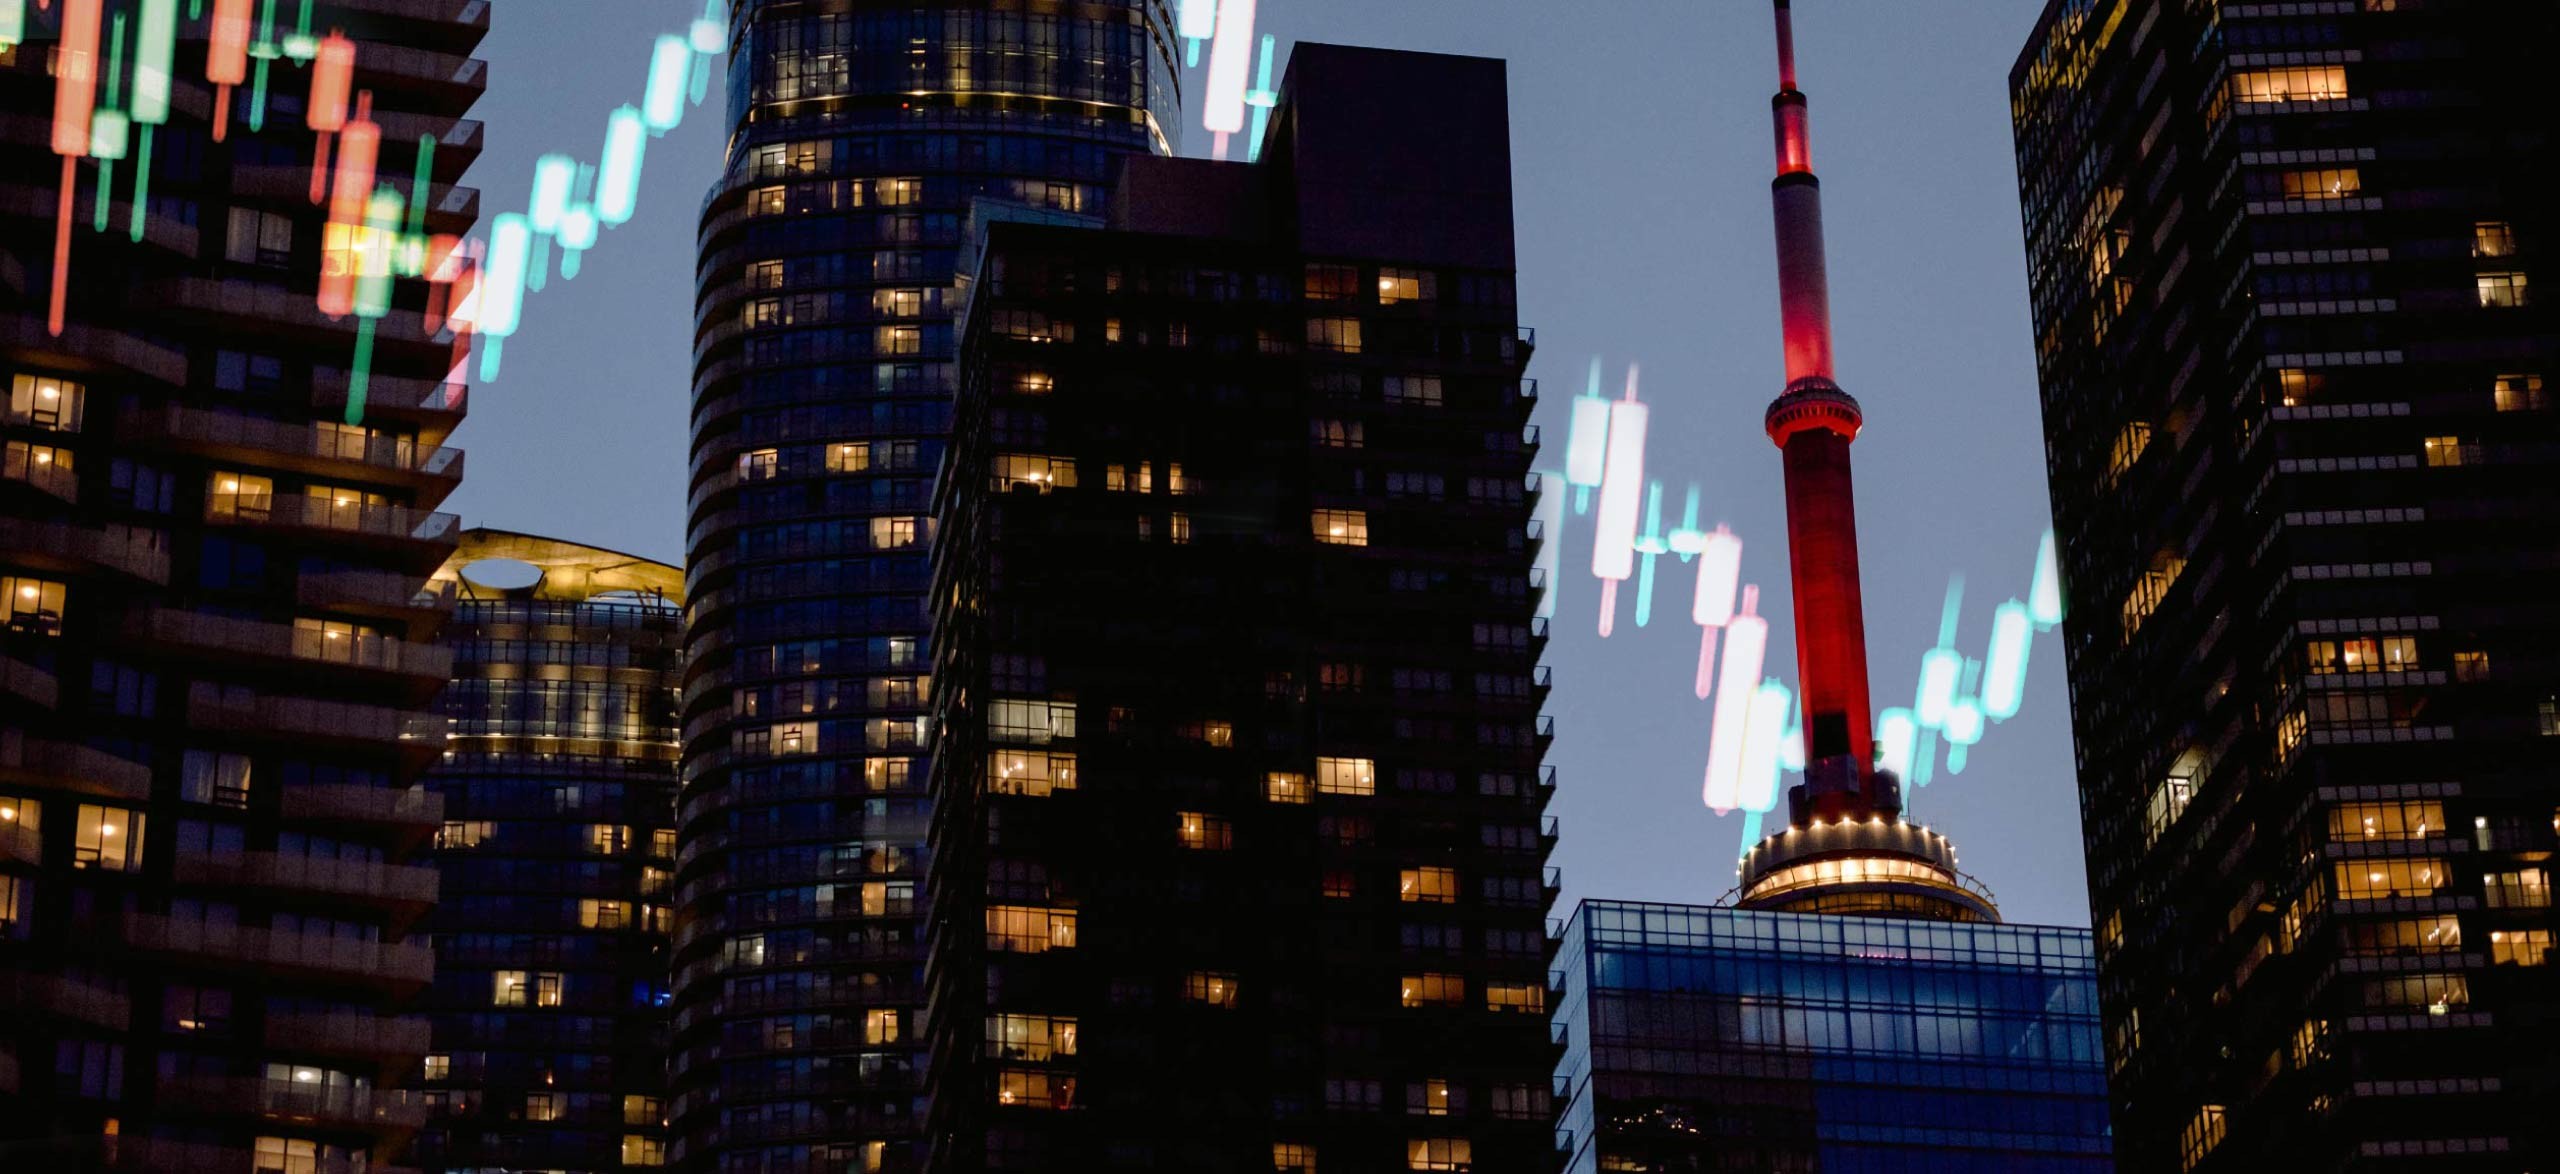 Downtown Toronto and the CN tower at illuminated at night.